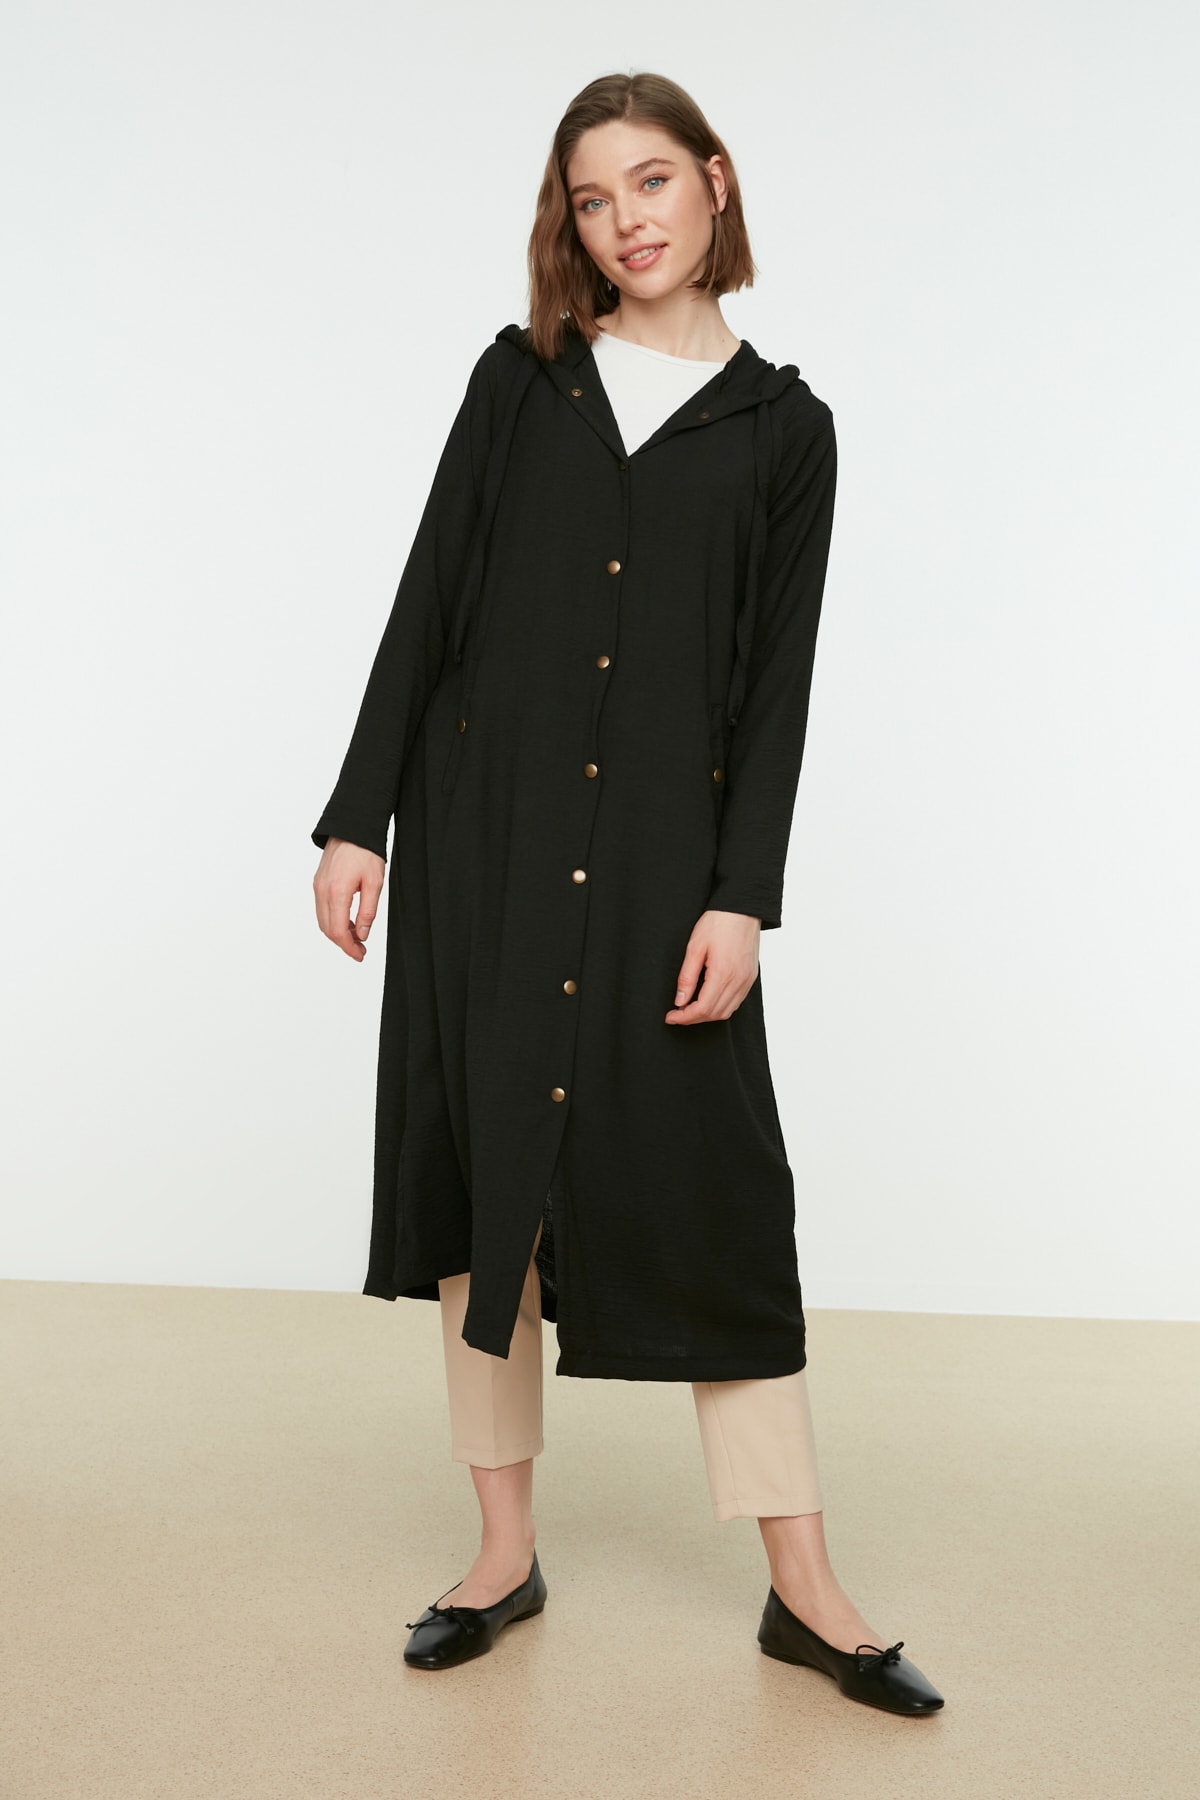 Trendyol Modest Cap & Abaya - Black - Tunic